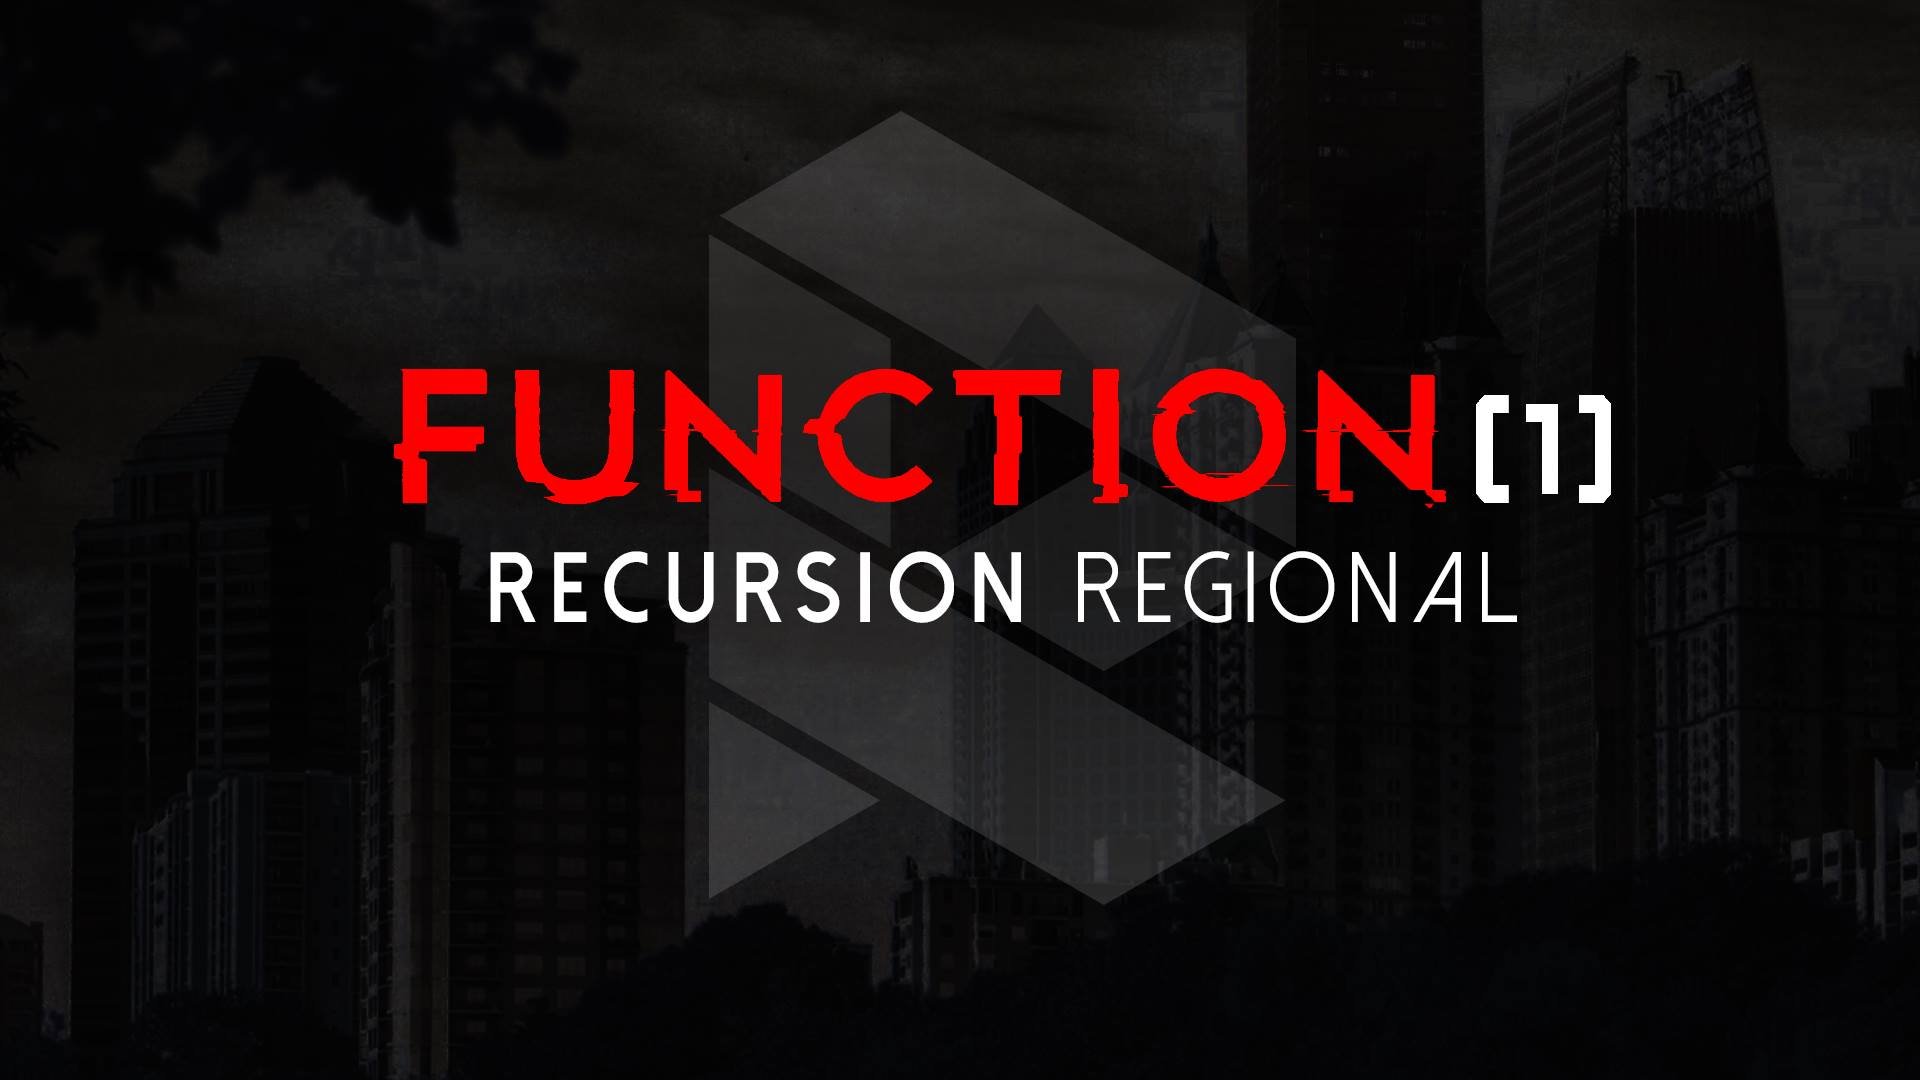 Function(1) - Recursion Regional - Melee Singles